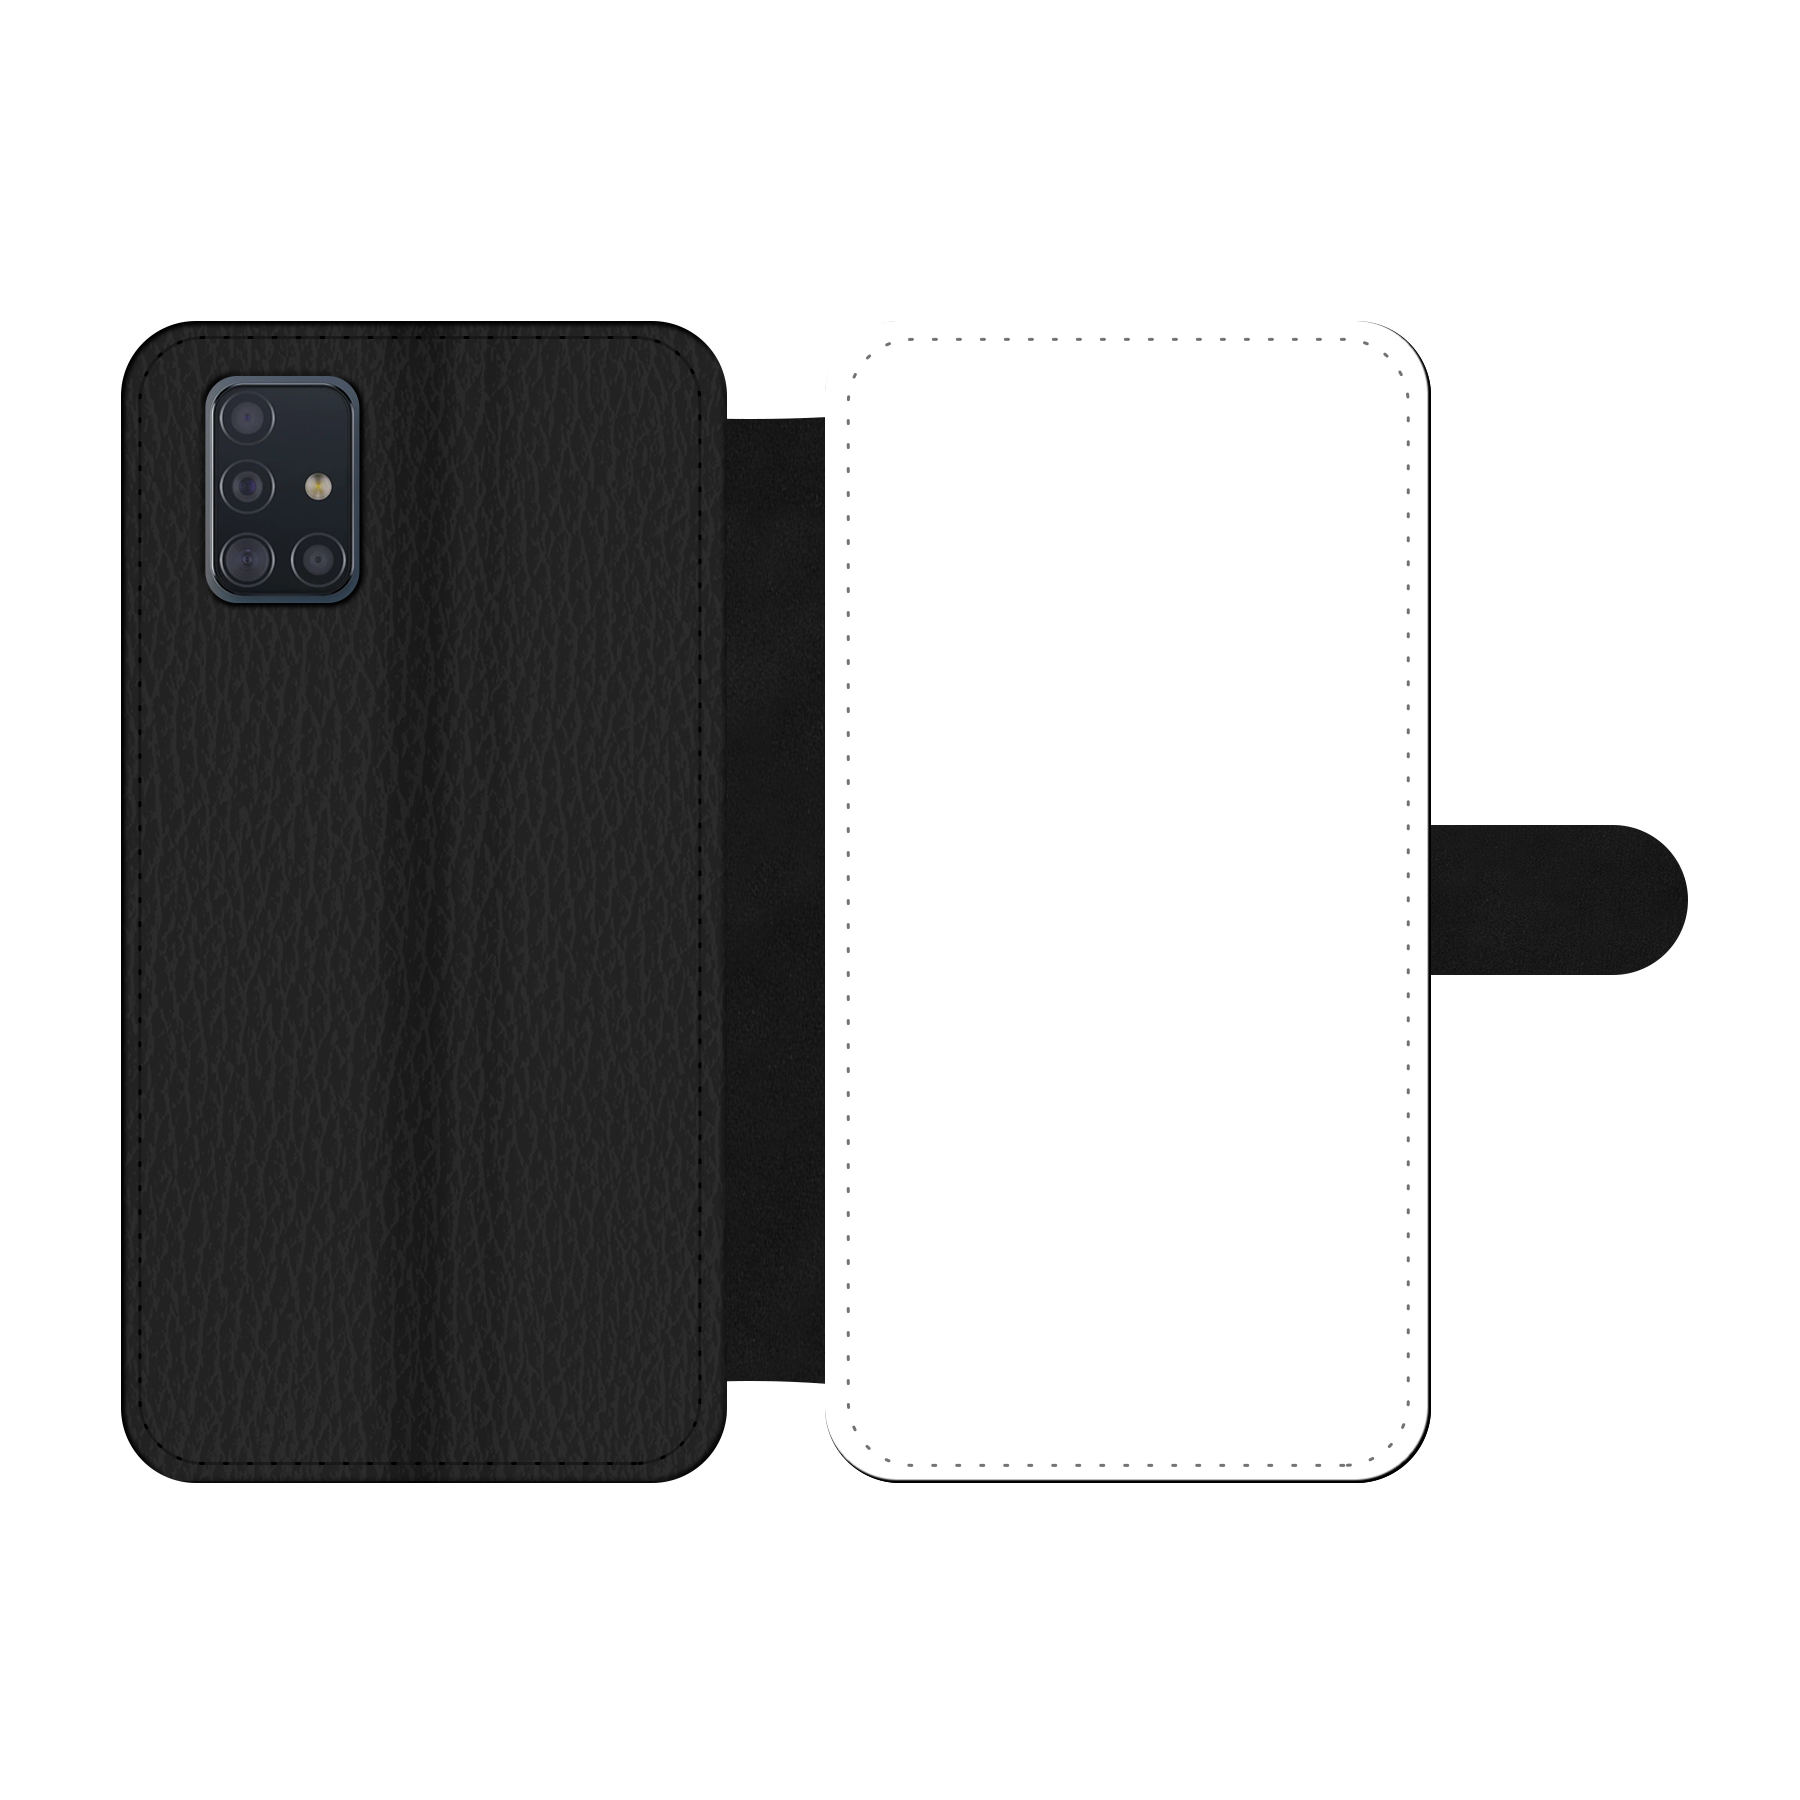 Samsung Galaxy A51 Wallet case (front printed)